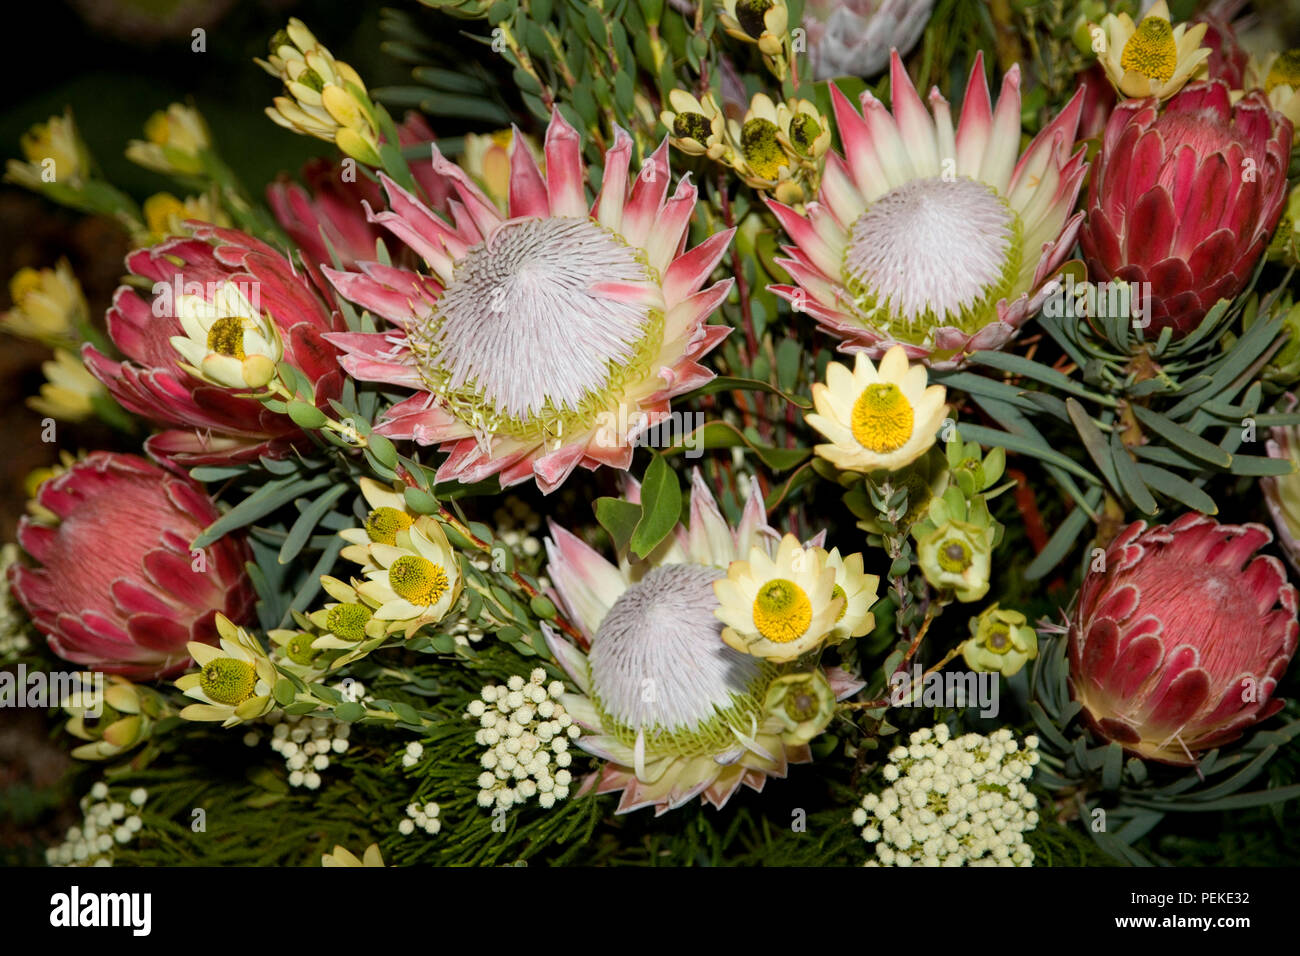 Protea arrangement at the Chelsea show Stock Photo